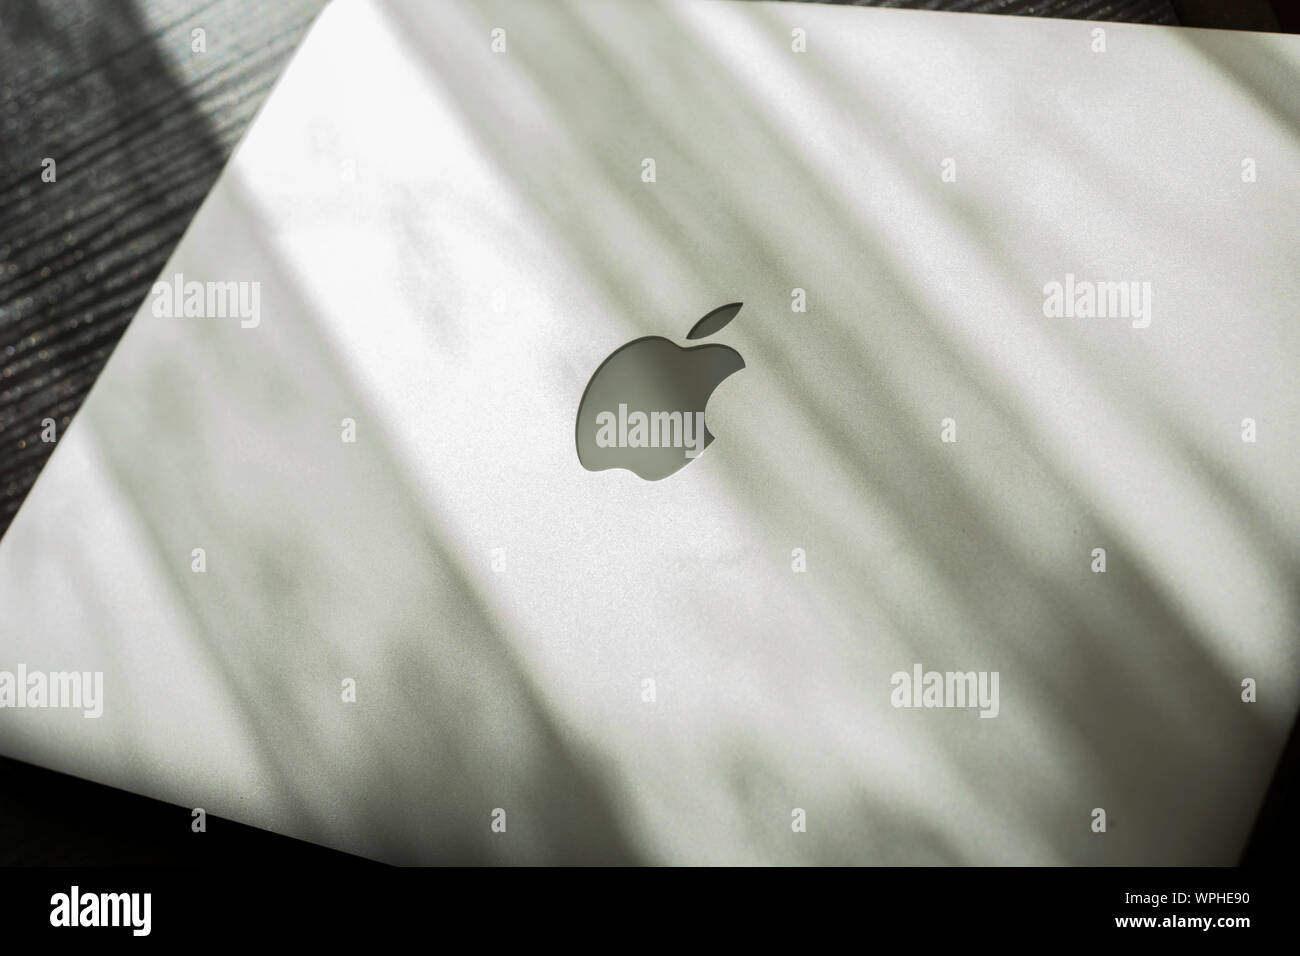 MacBook Air on sunny table. Stock Photo